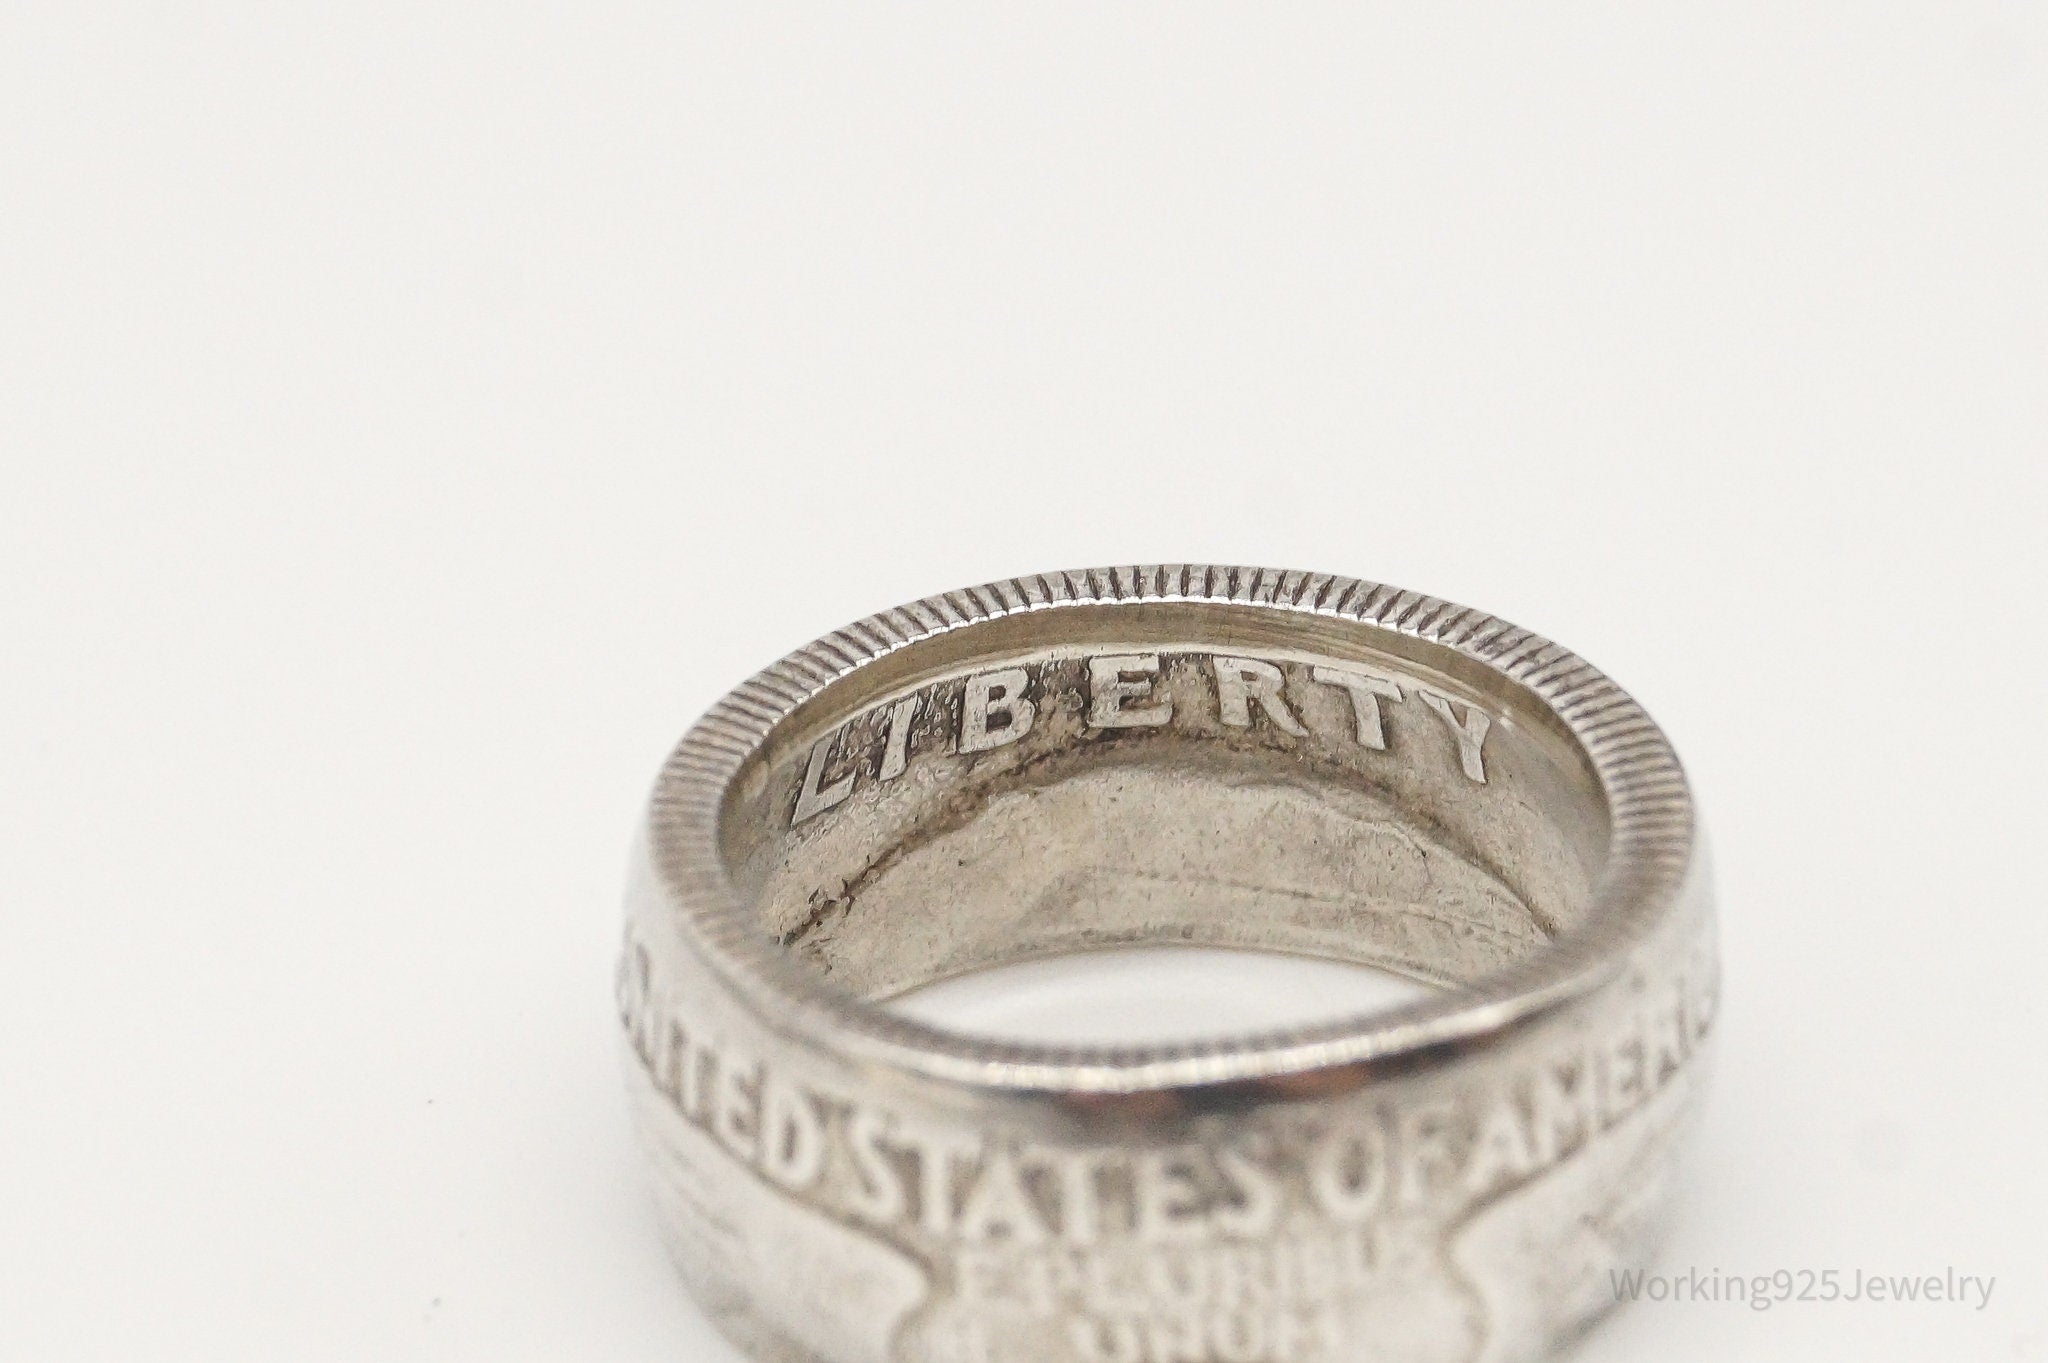 Vintage 1958 Washington Quarter Coin Silver Ring - Size 4.25